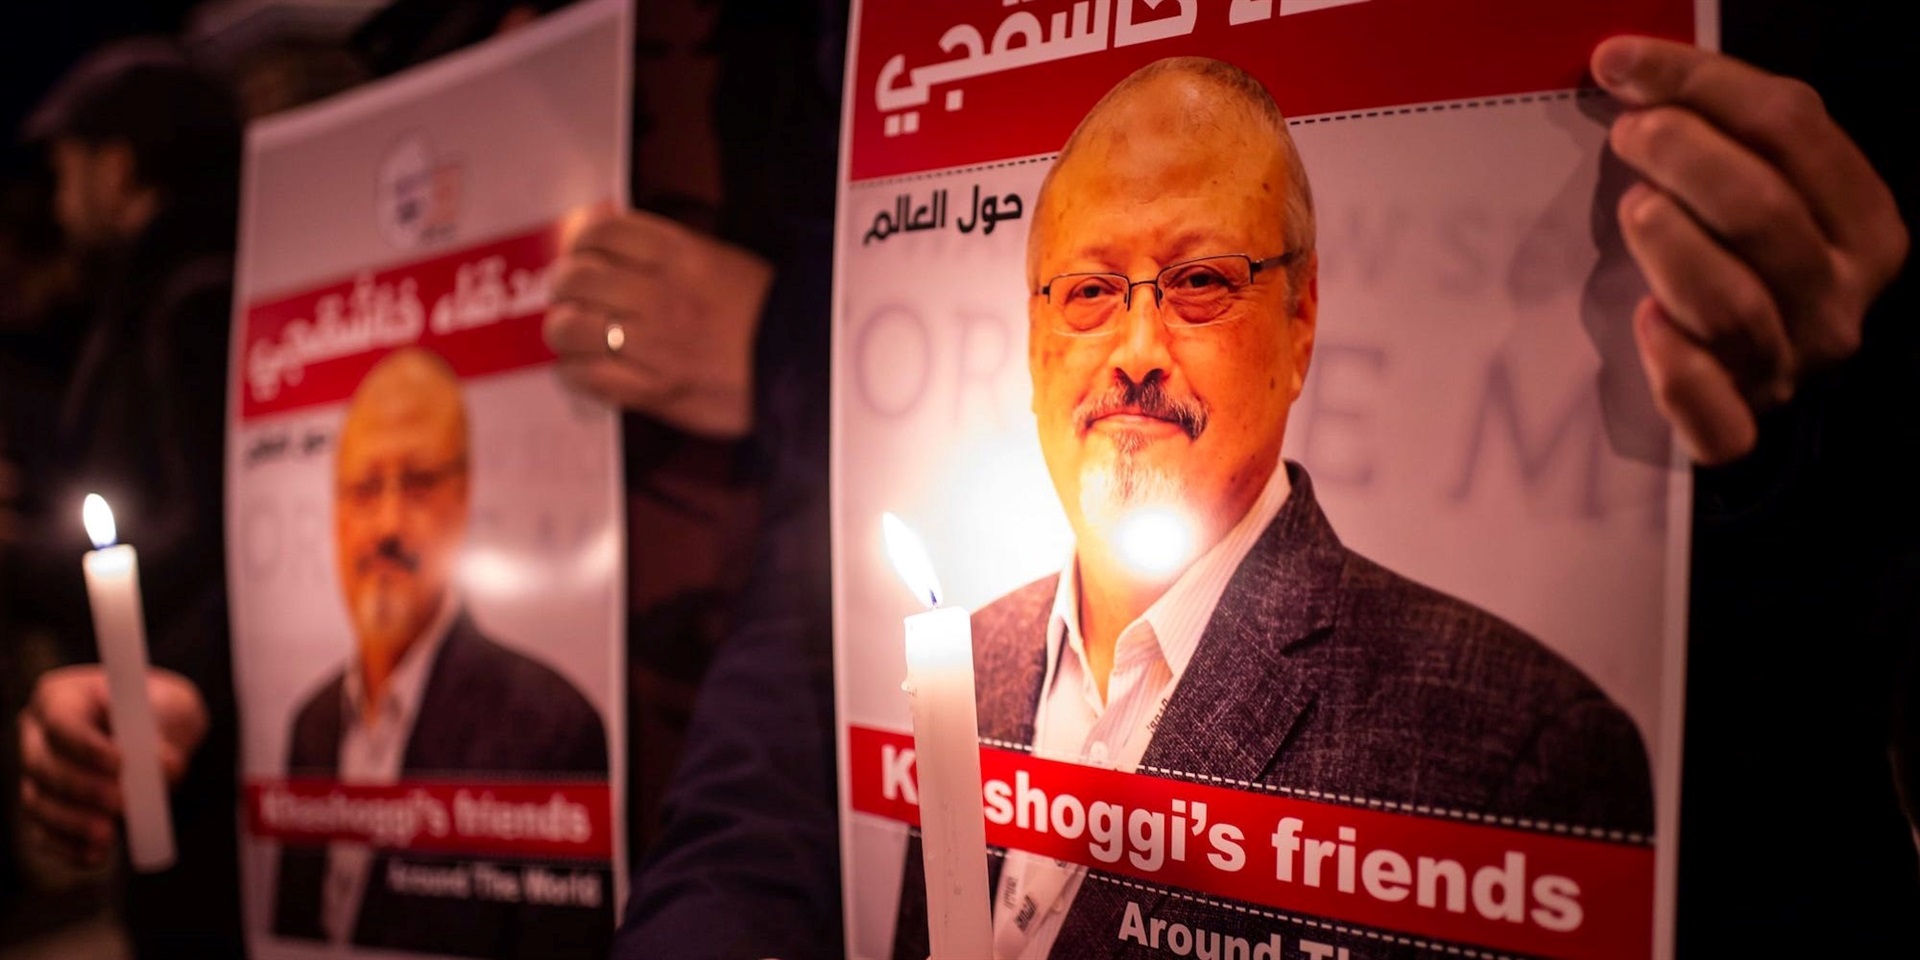 LIHAT |  Prancis bebaskan tersangka Khashoggi, akui identitasnya salah